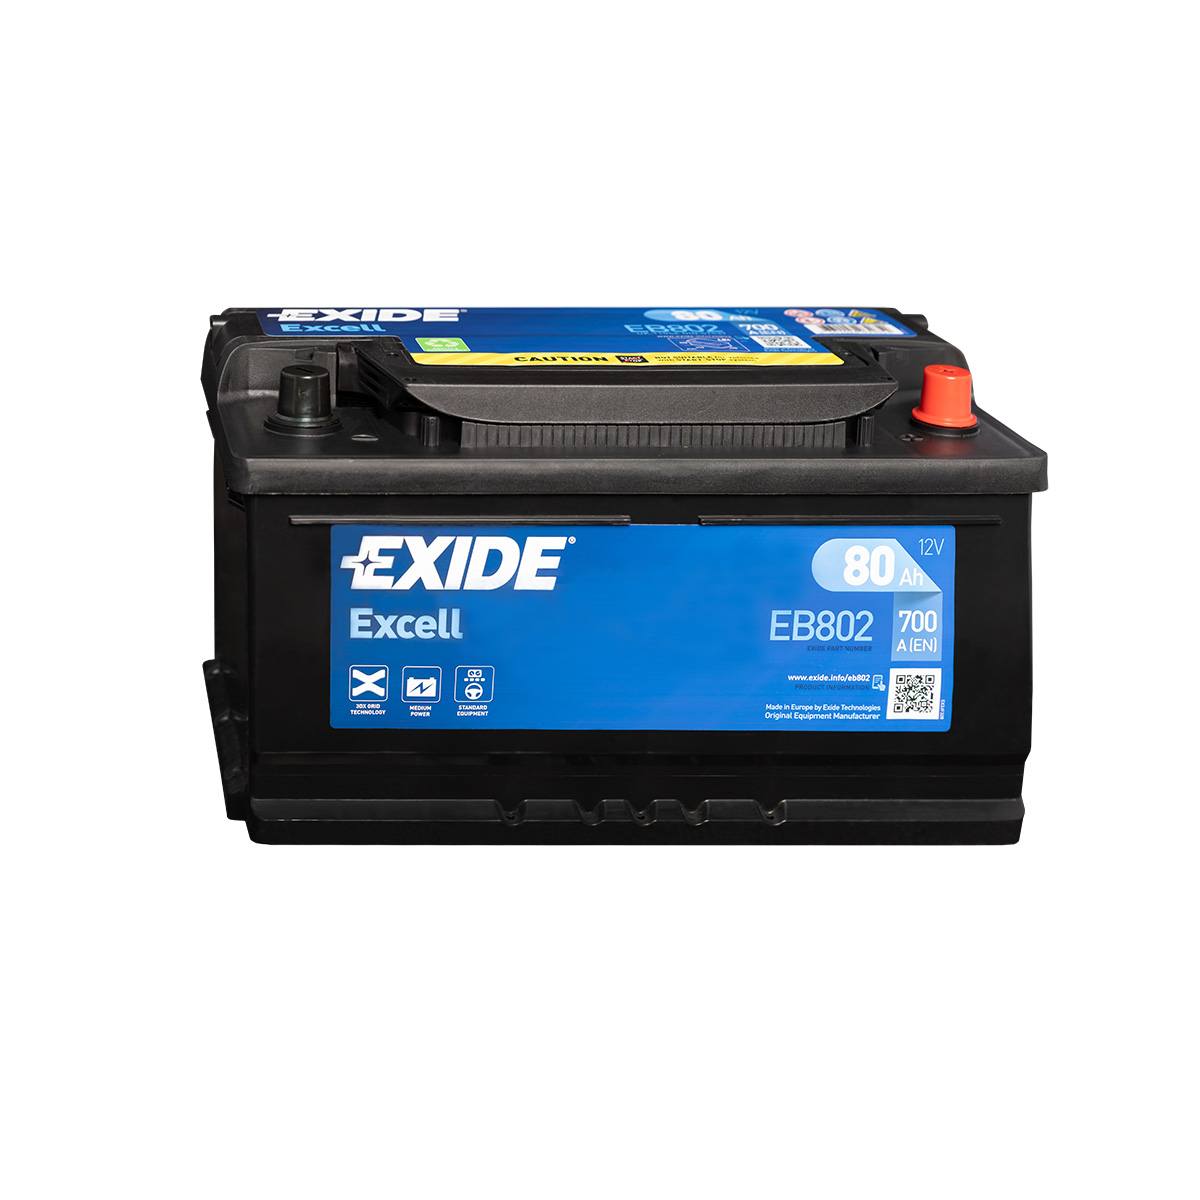 Exide Excell EB802 12V 80Ah Autobatterie